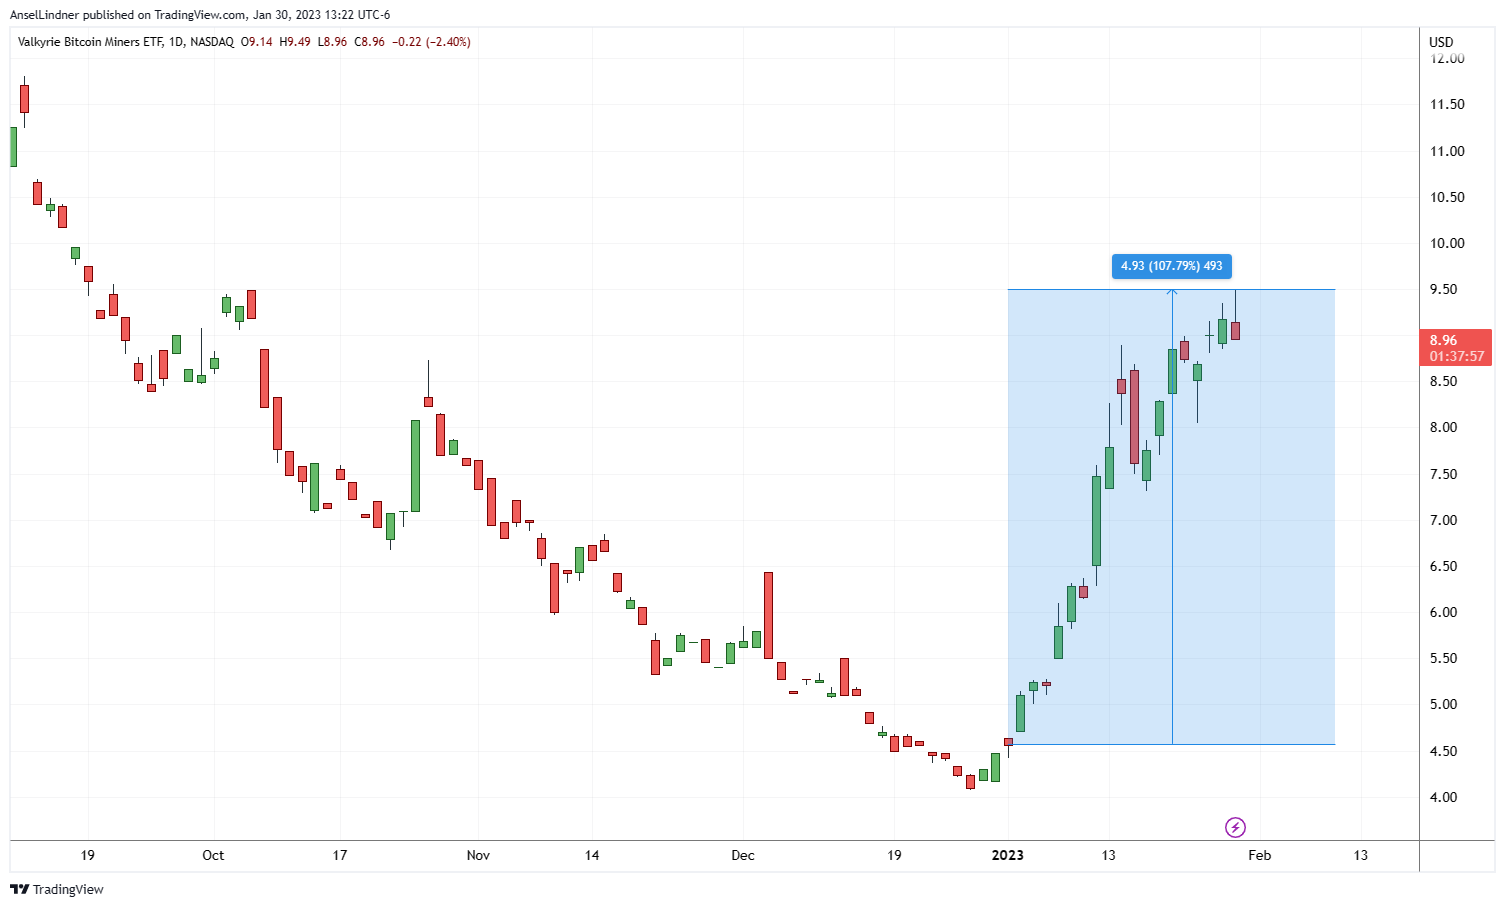 WGMI Bitcoin miner ETF chart, up 107%